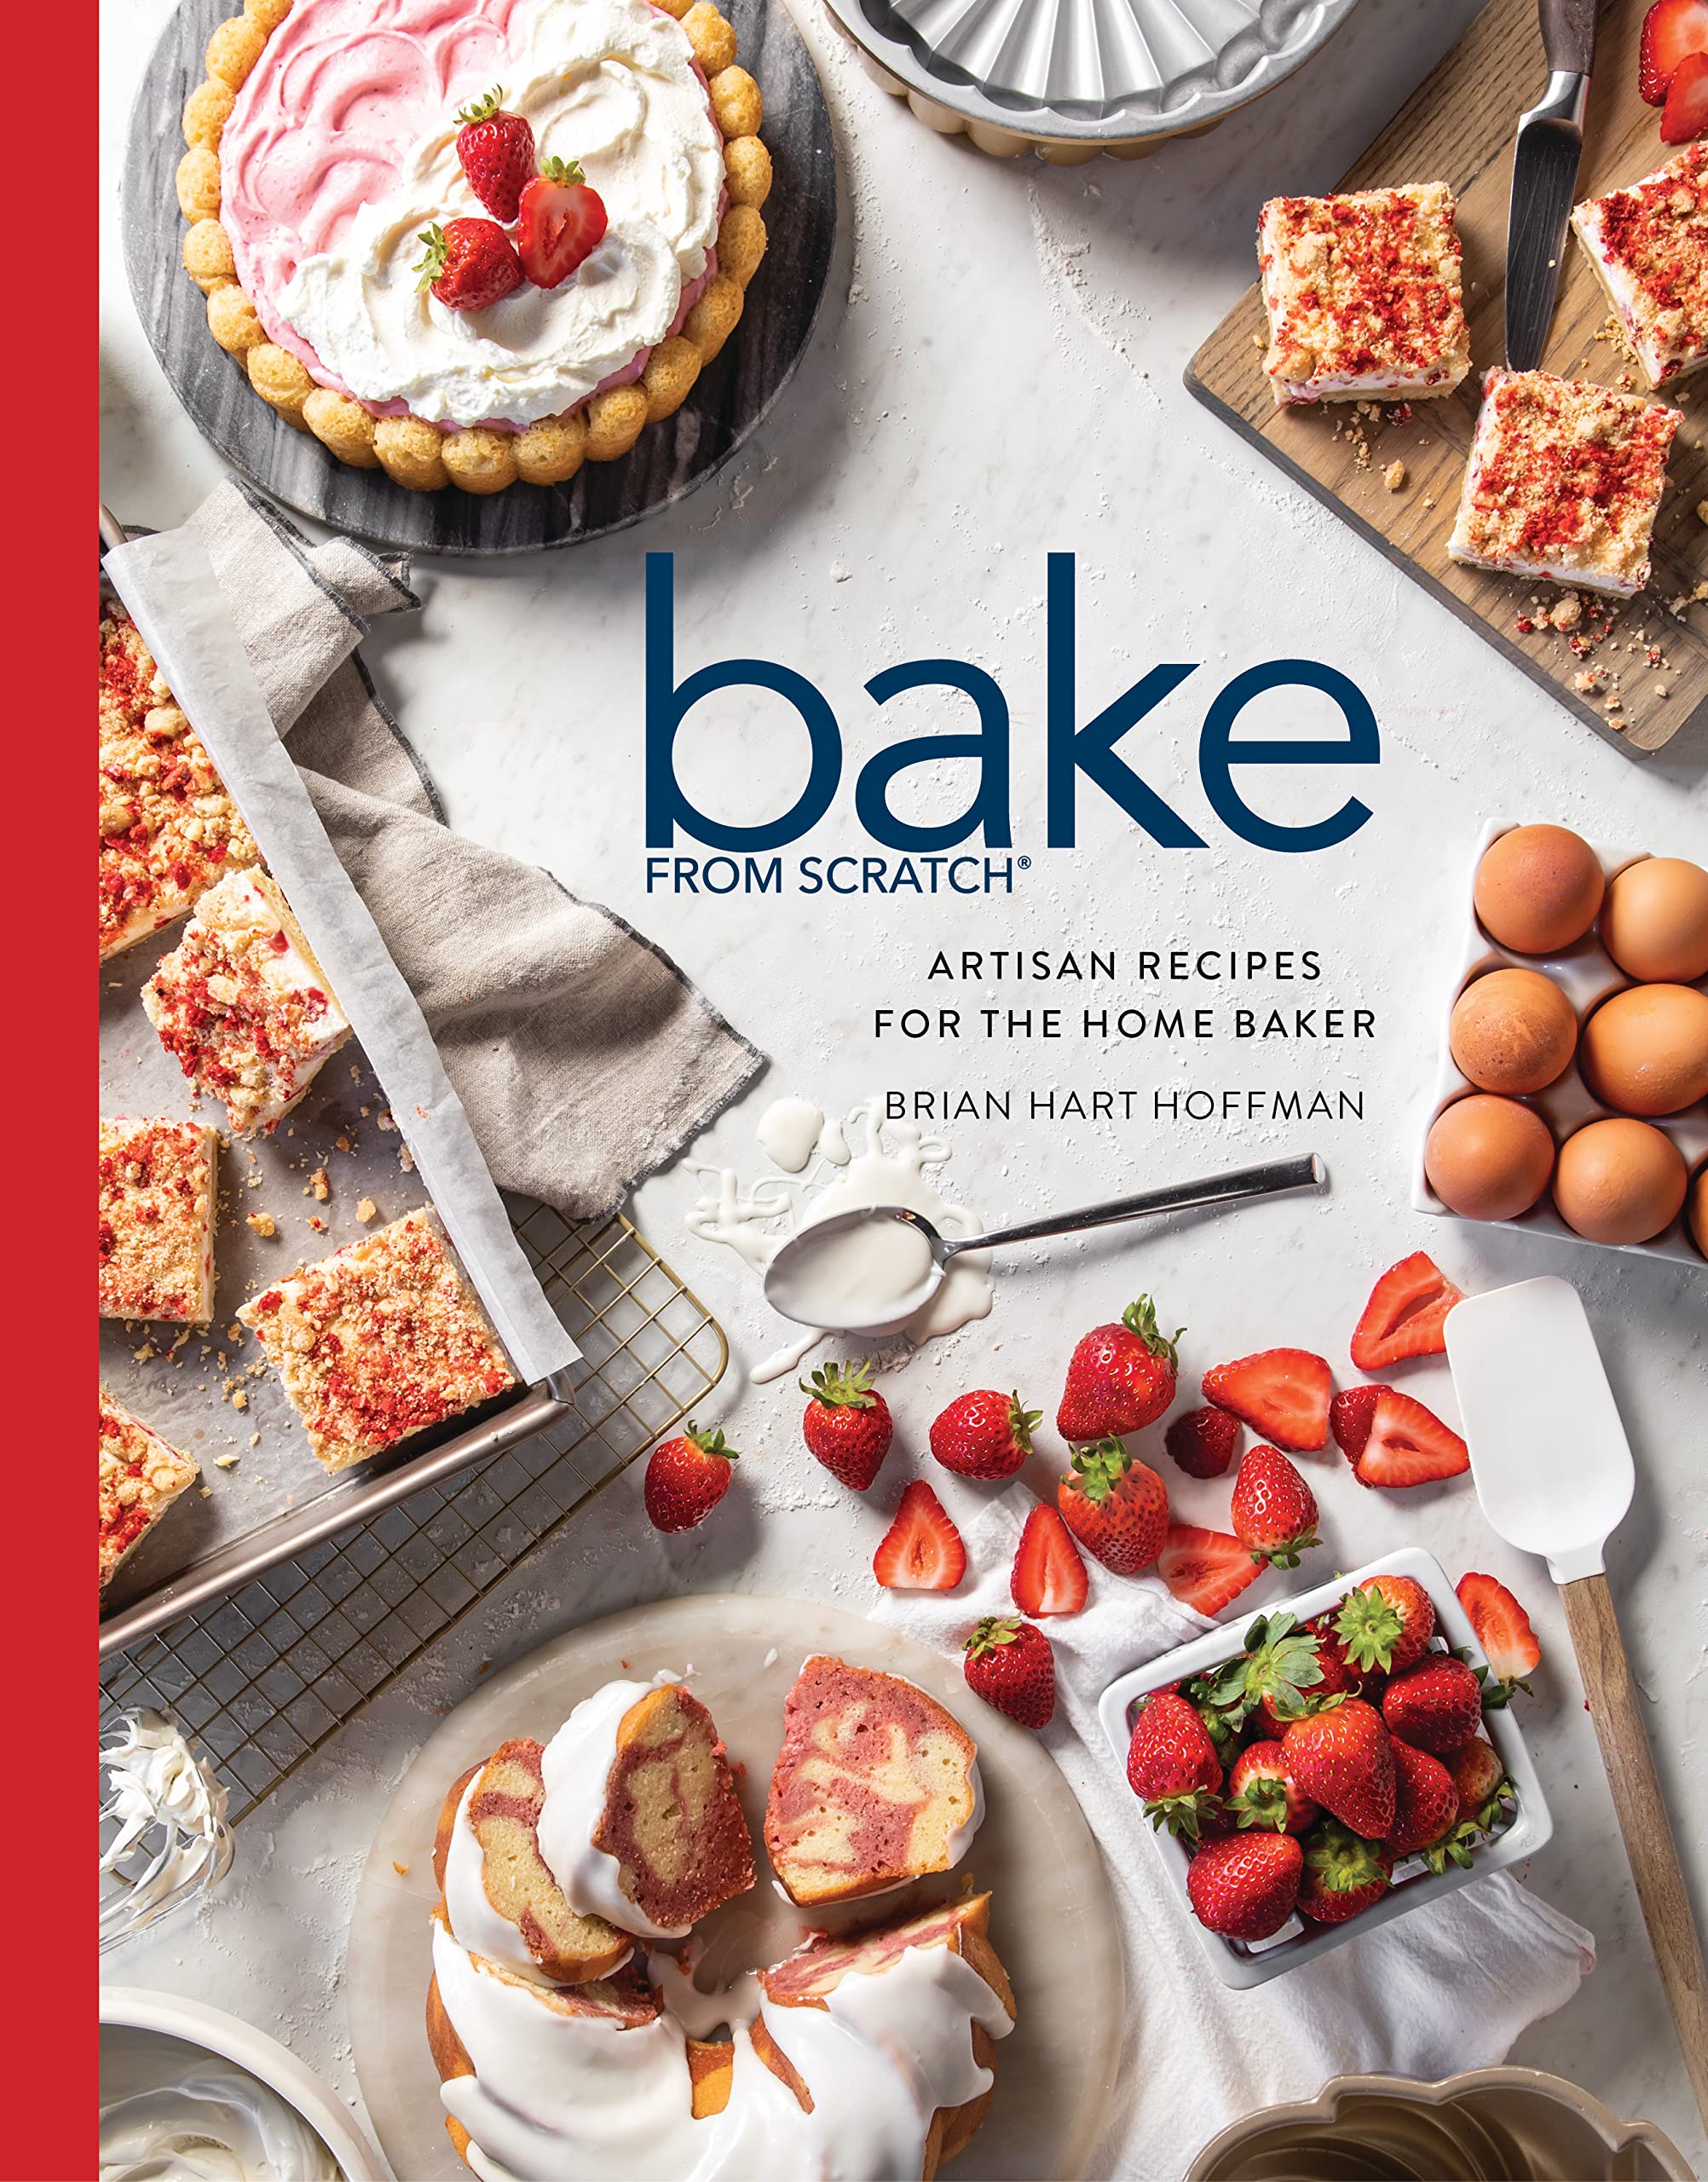 Bake from Scratch (Vol 7): Artisan Recipes for the Home Baker (Brian Hart Hoffman)